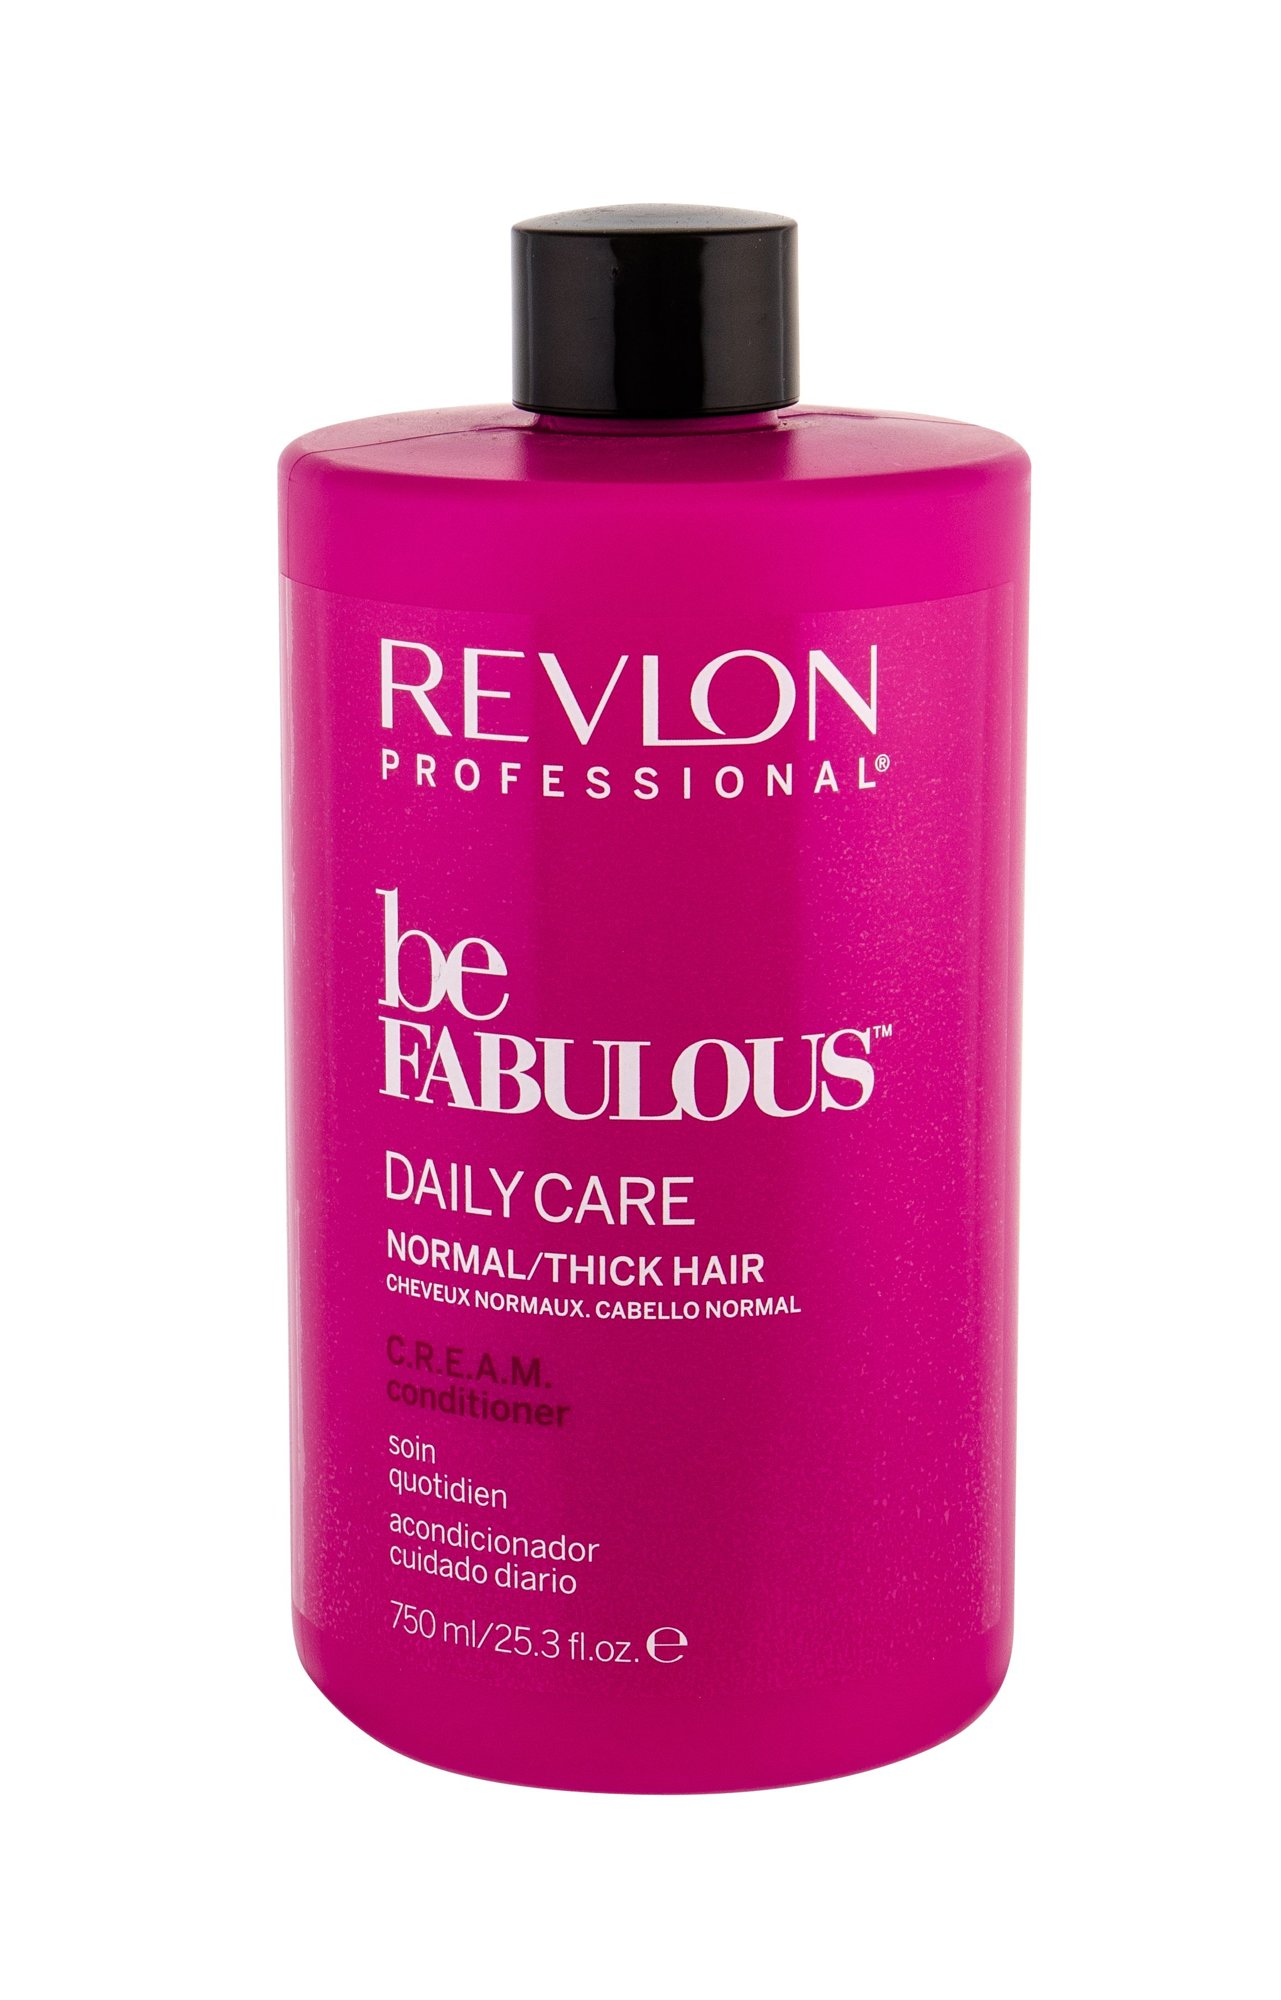 Revlon Professional Be Fabulous Daily Care Normal/Thick Hair kondicionierius